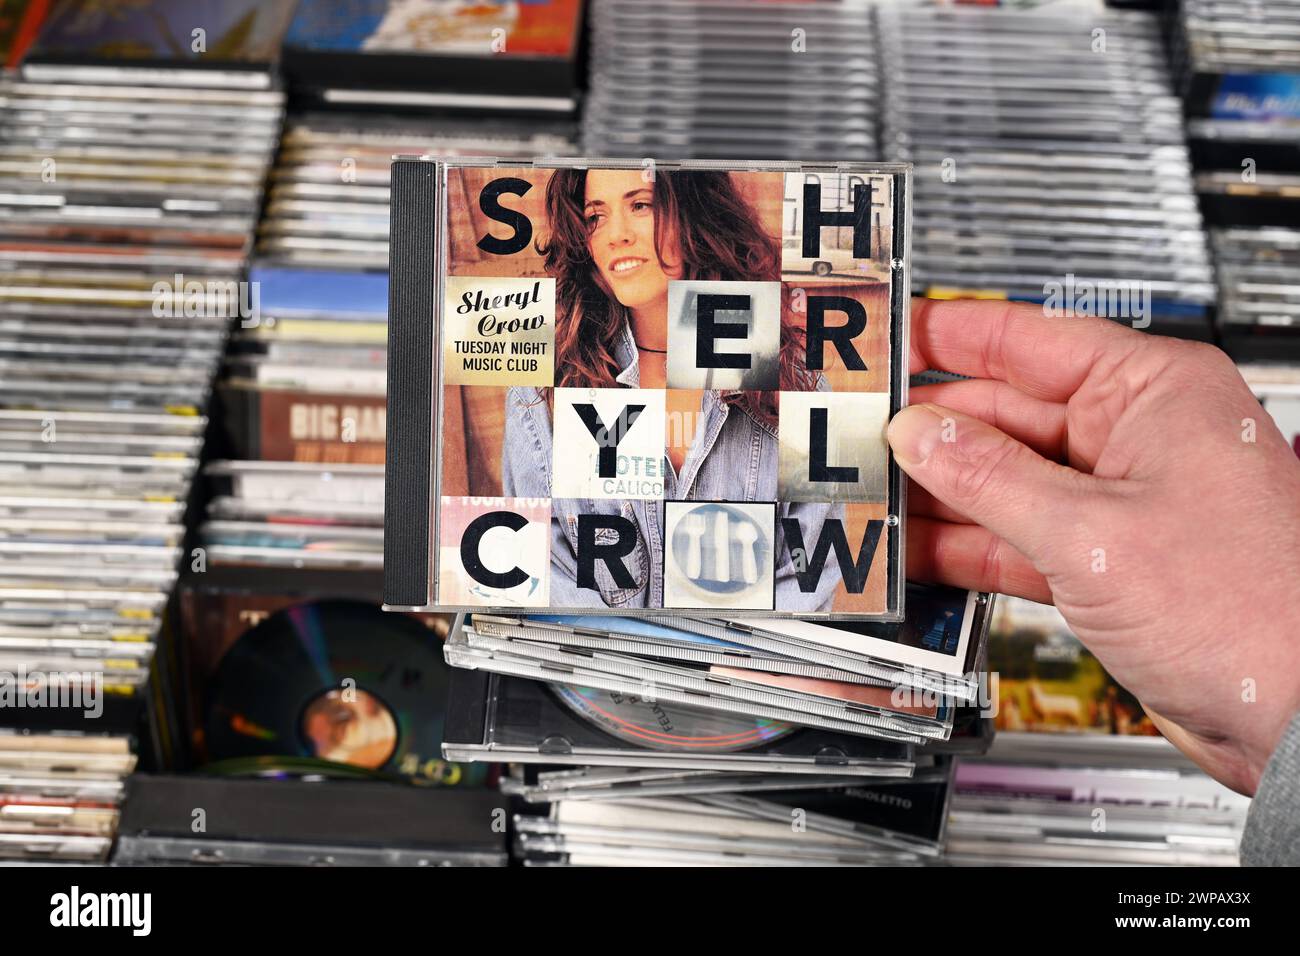 CD: Sheryl Crow - Tuesday Night Music Club Stock Photo